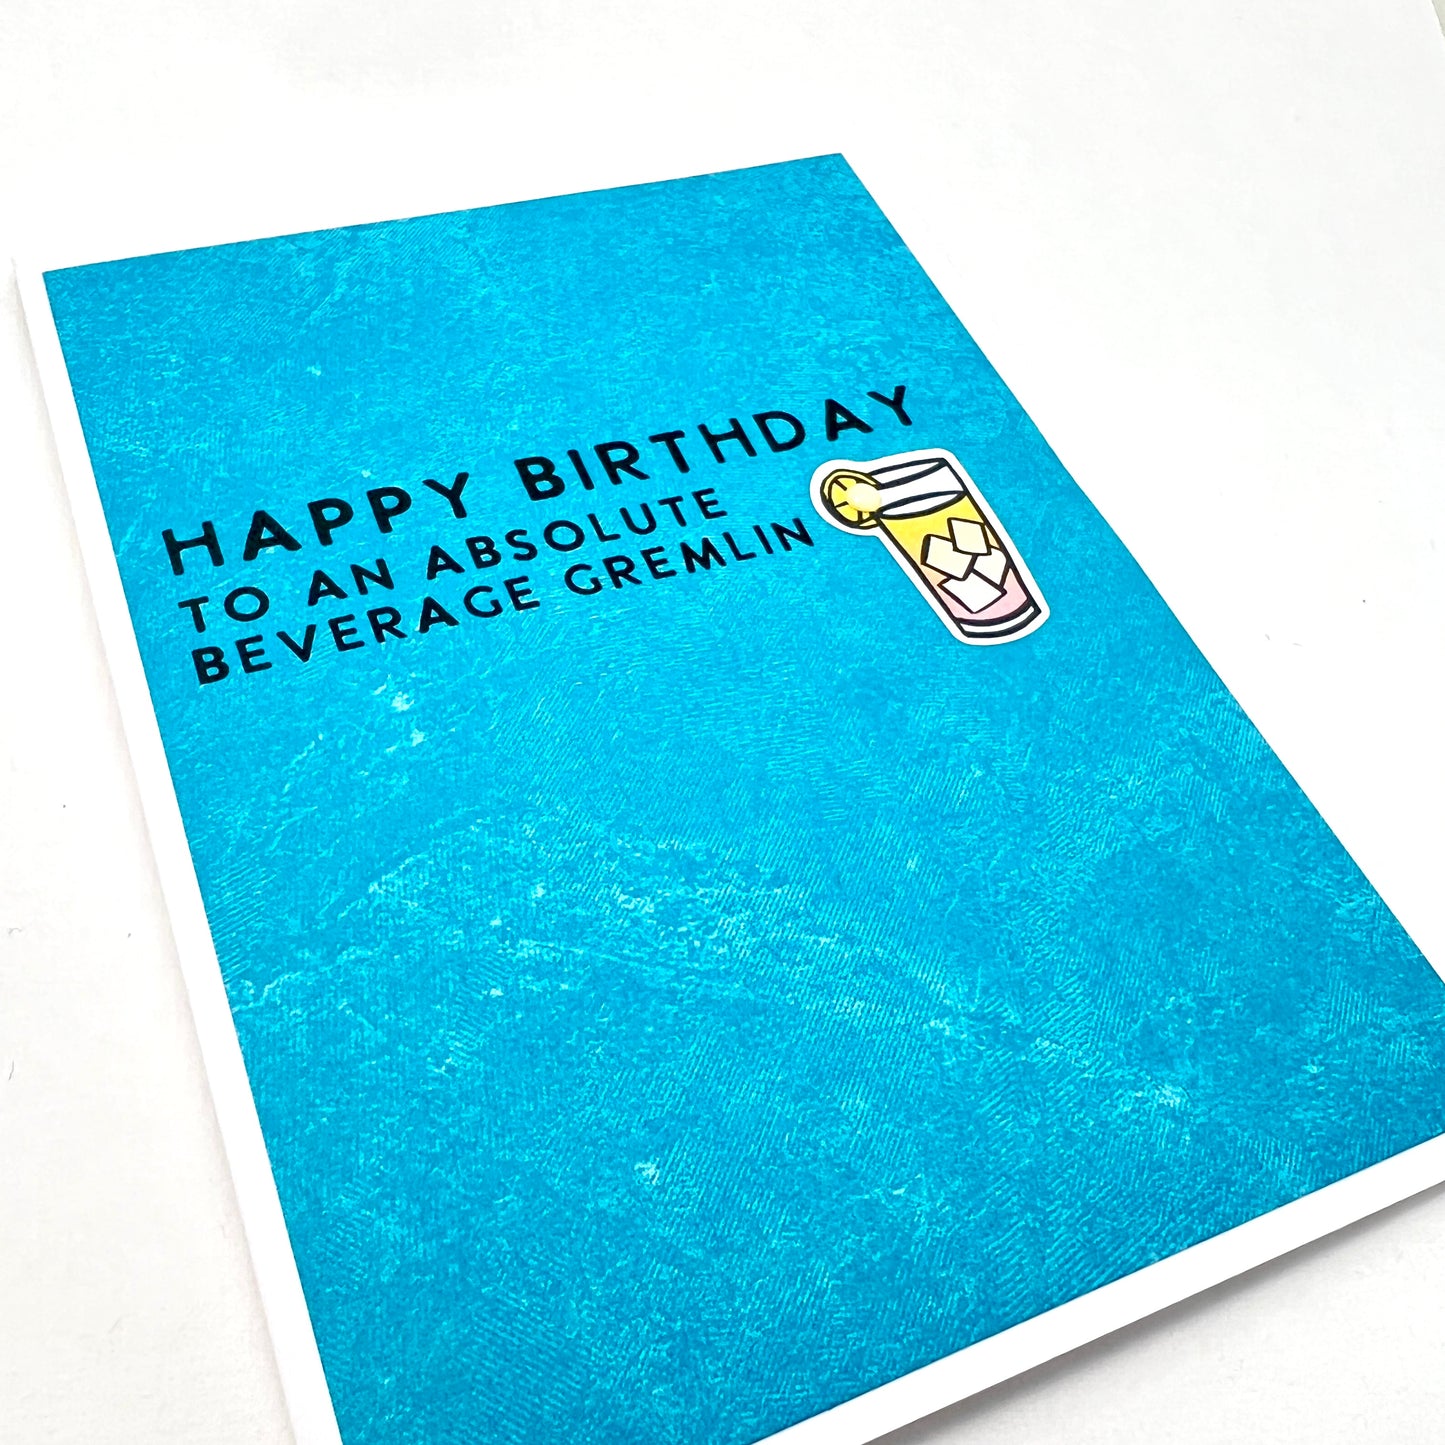 Beverage Gremlin birthday card